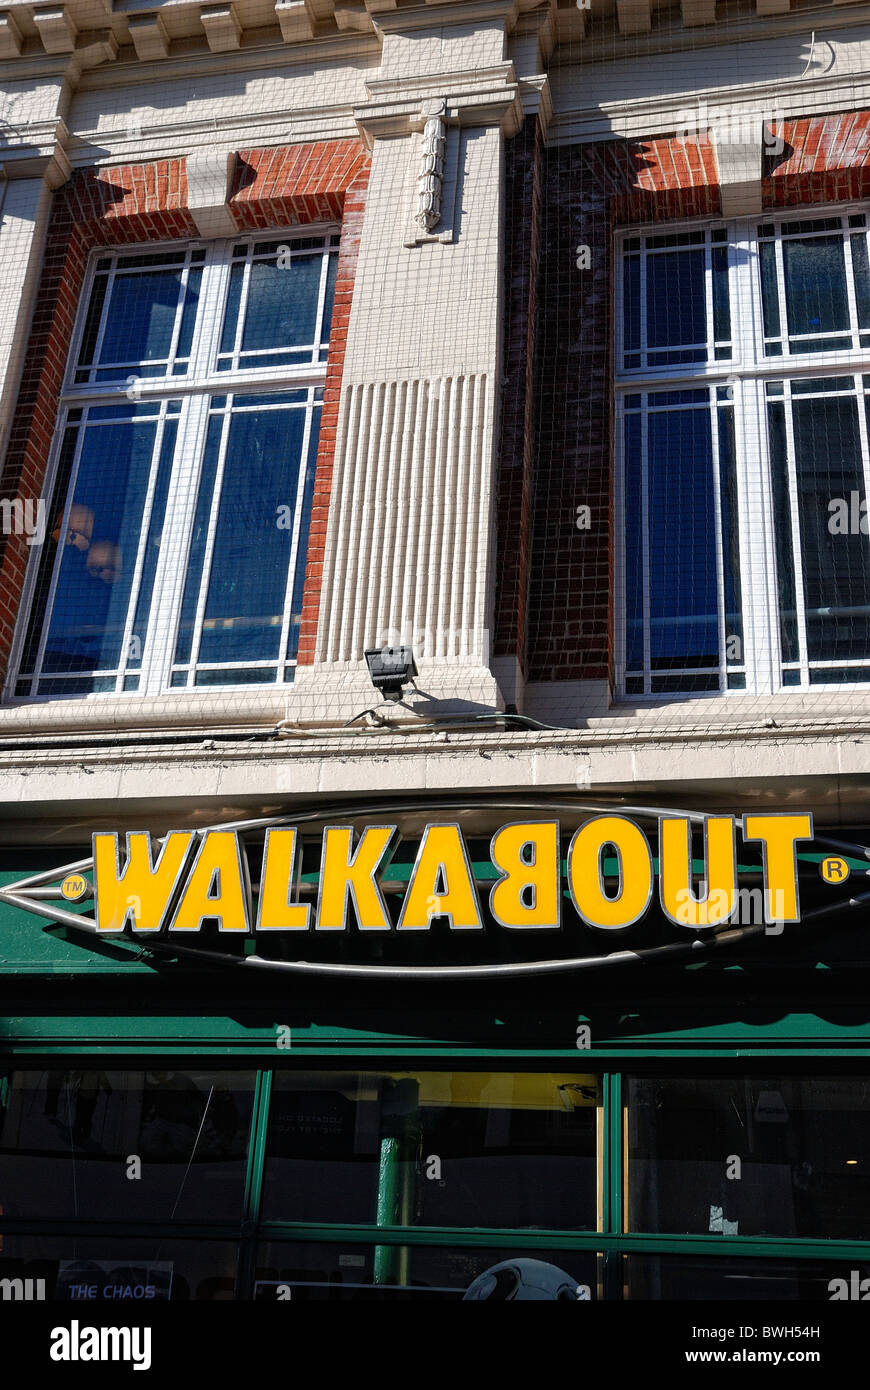 walkabout bar logo in uk high street Stock Photo